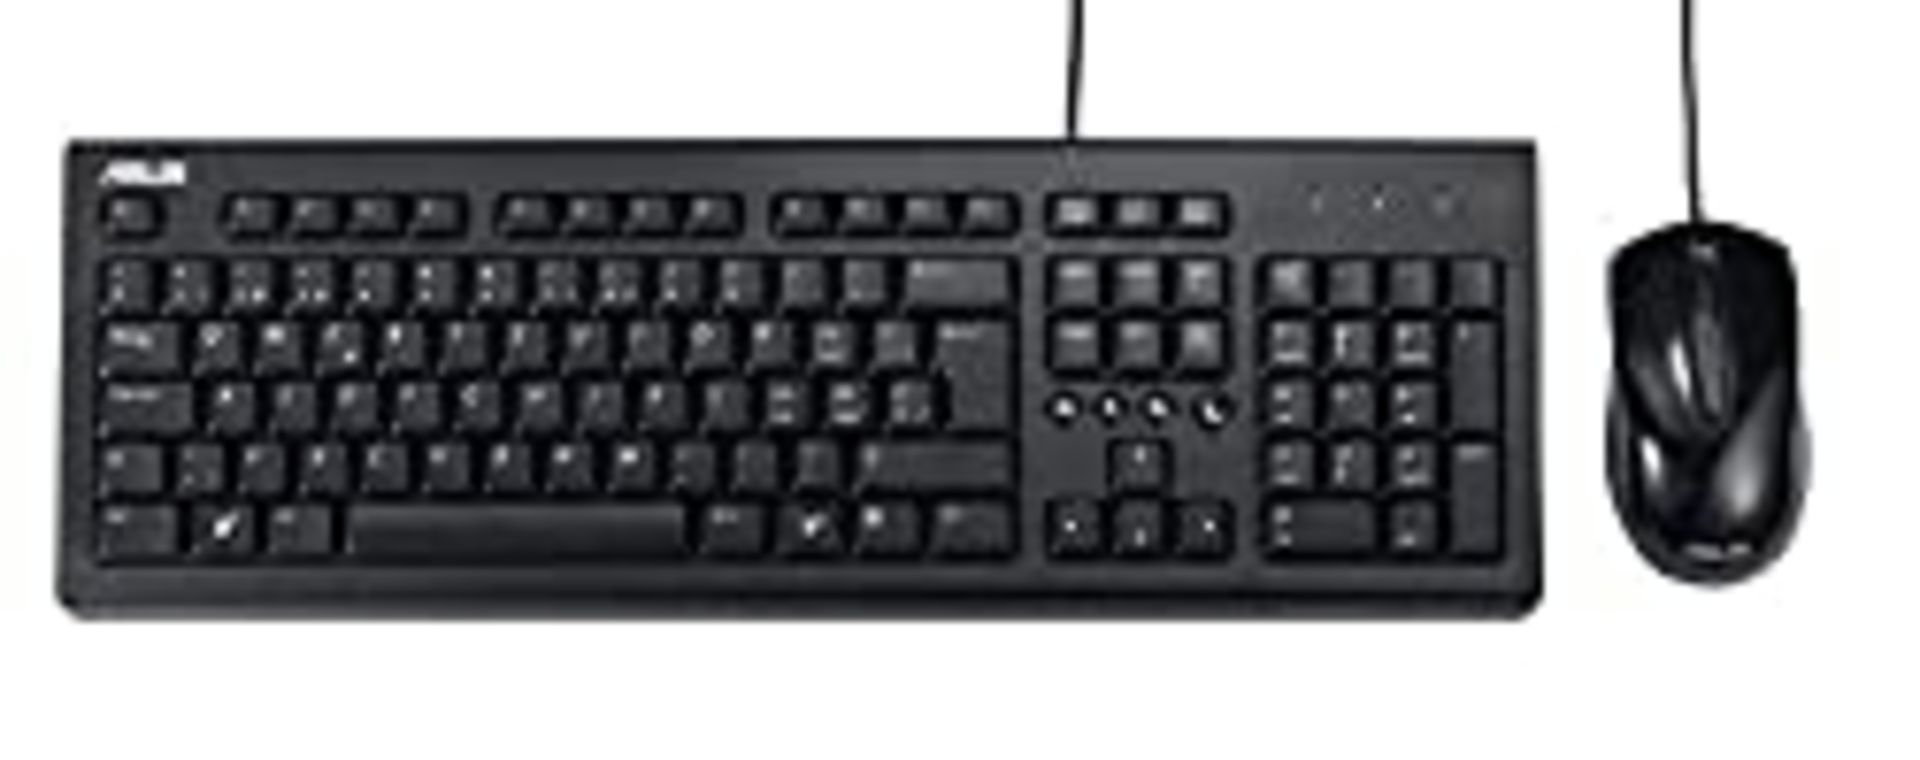 RRP £26.79 ASUS U2000 Wired Keyboard and Mouse Bundle - Black